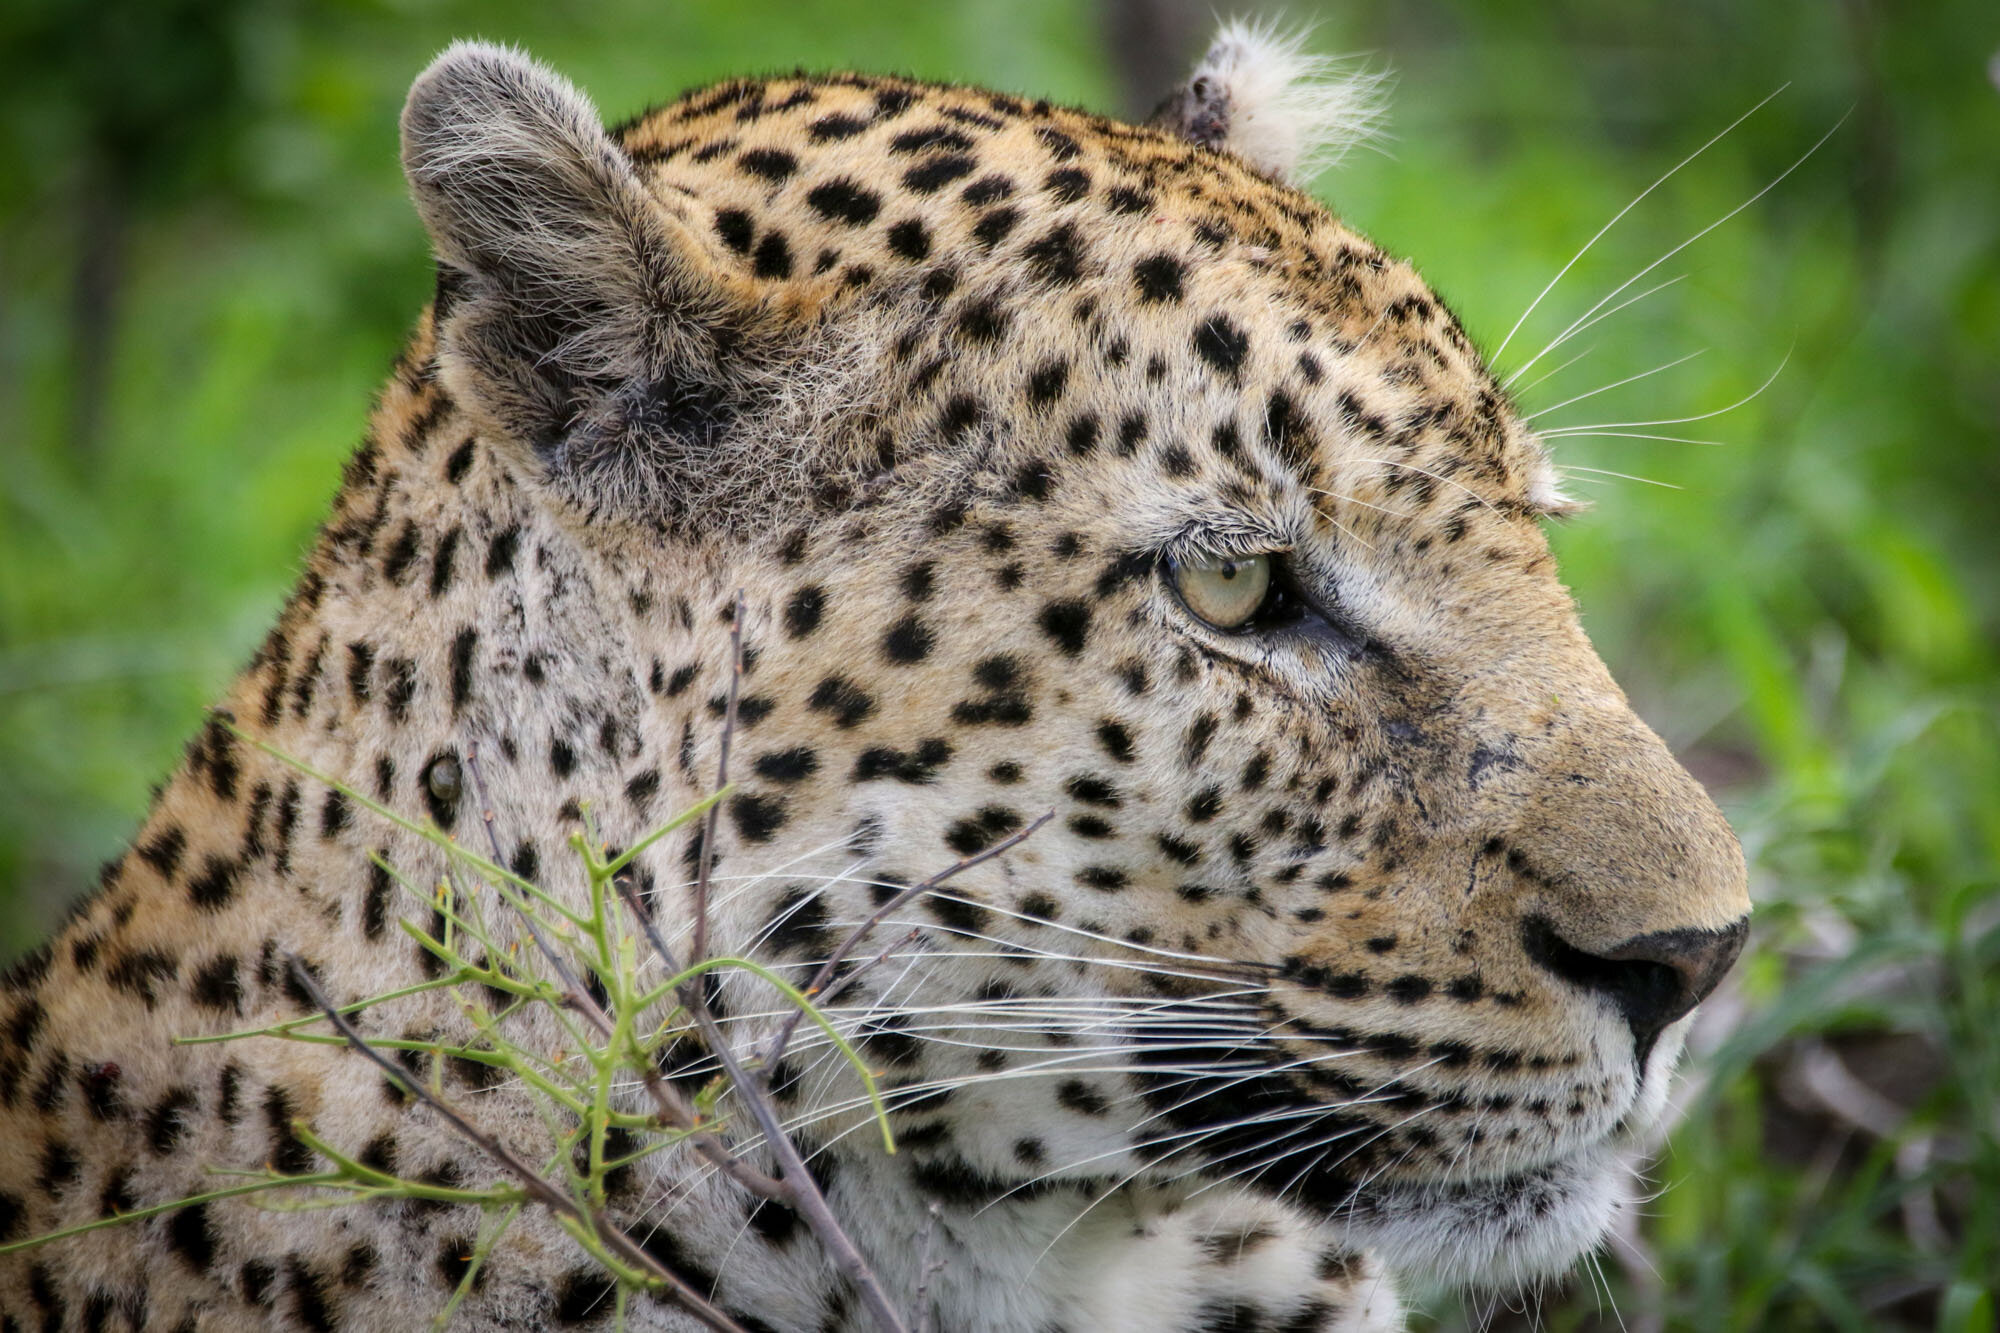 Leopard_in_grass_South_Africa_Safari_2016_©_Howard_Wolff-15.jpg